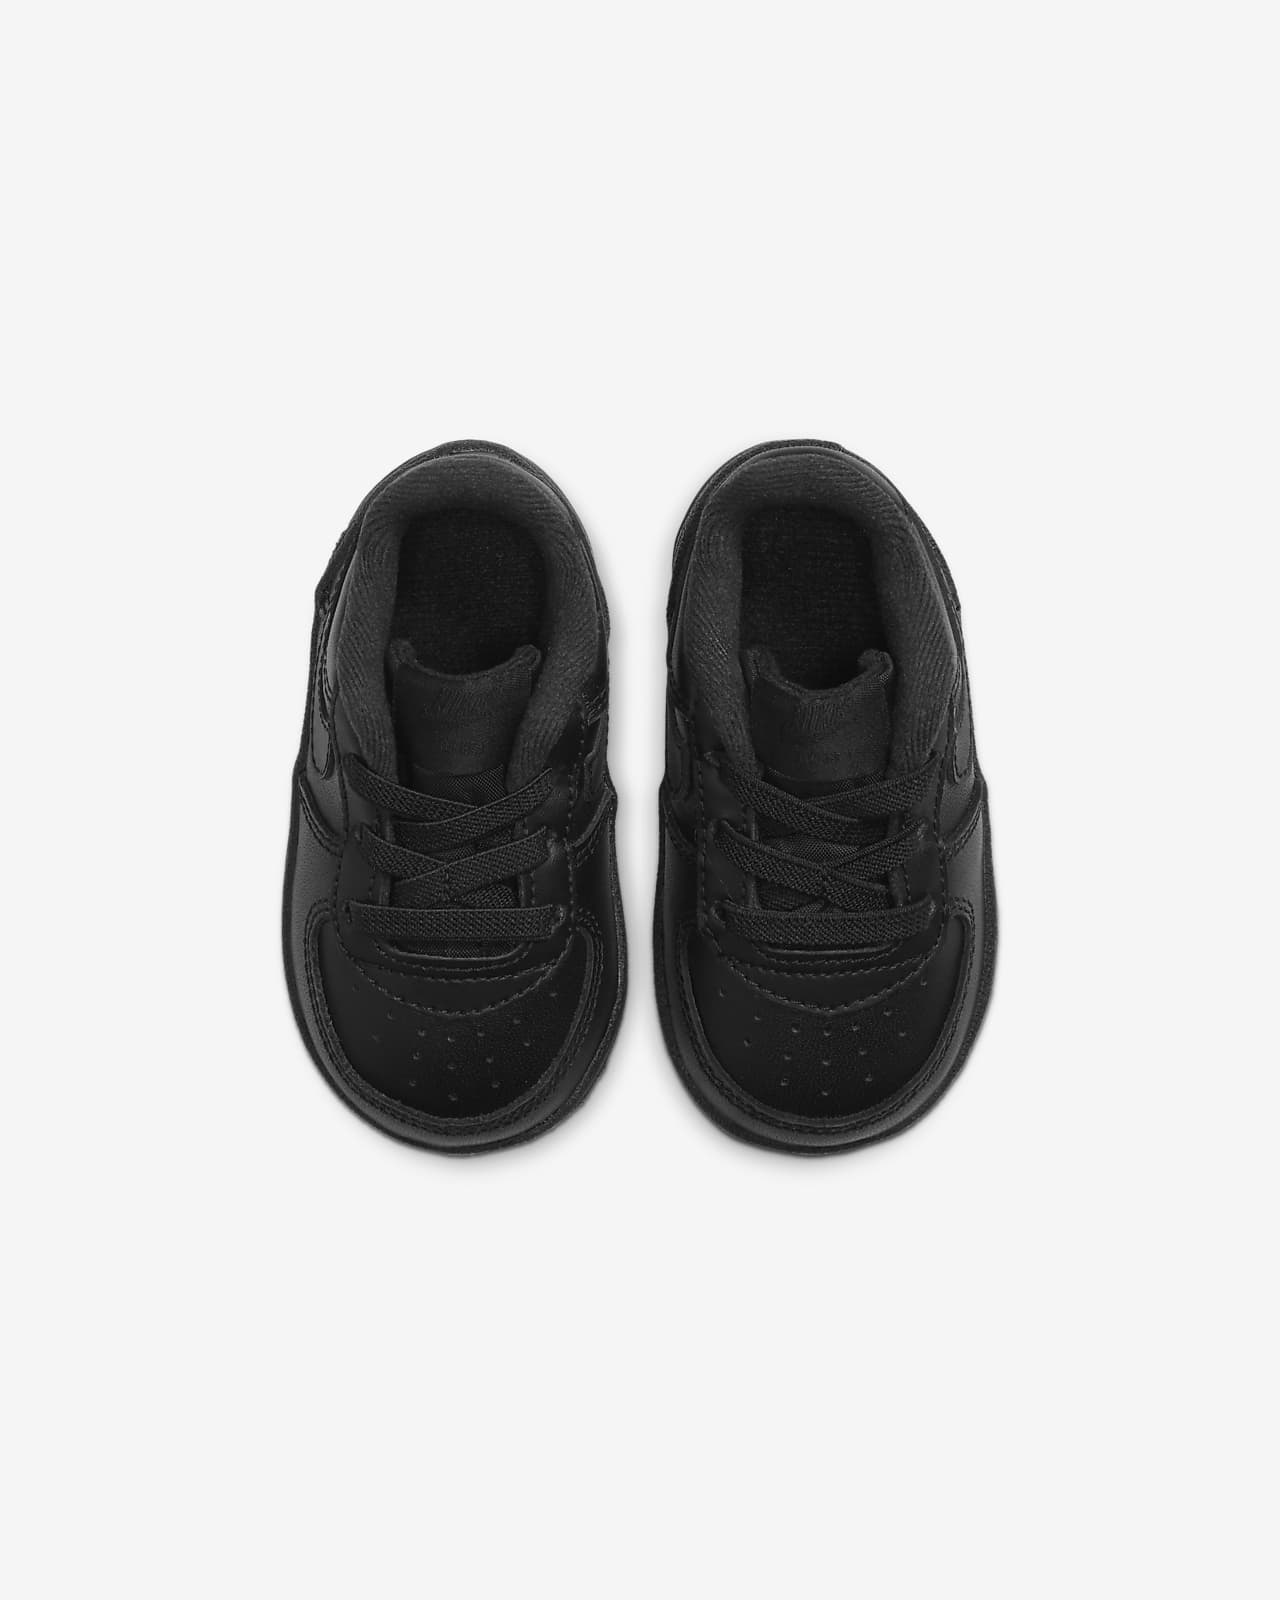 Nike Air Force 1 Crib Shoes Soft Bottom Baby Size 2C Triple Black OG Leather